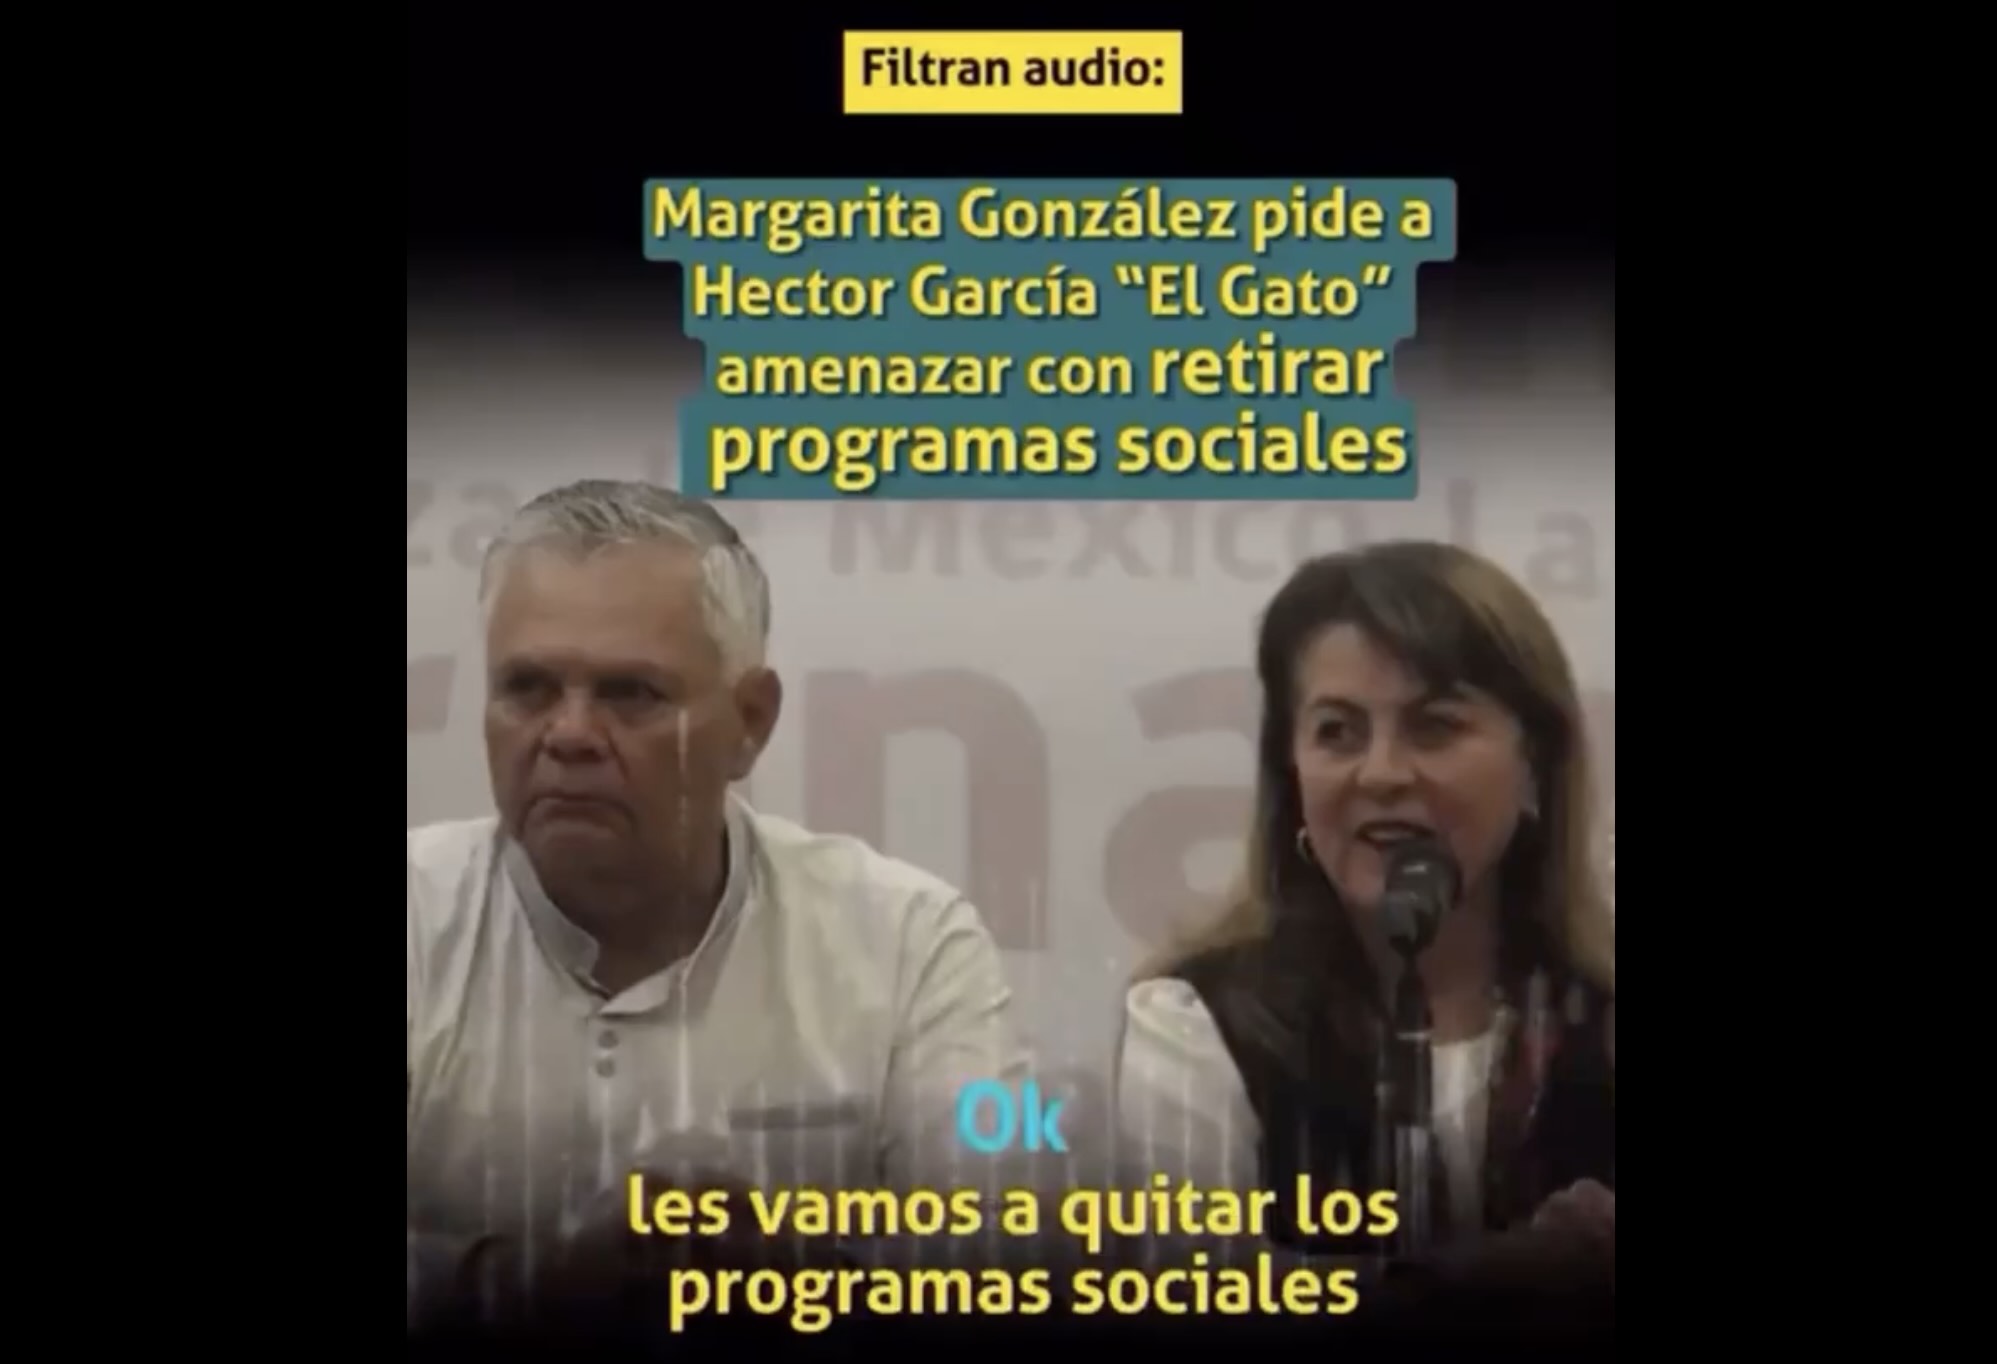 Filtran audio: candidata de Morena pide amenacen con quitar programas sociales